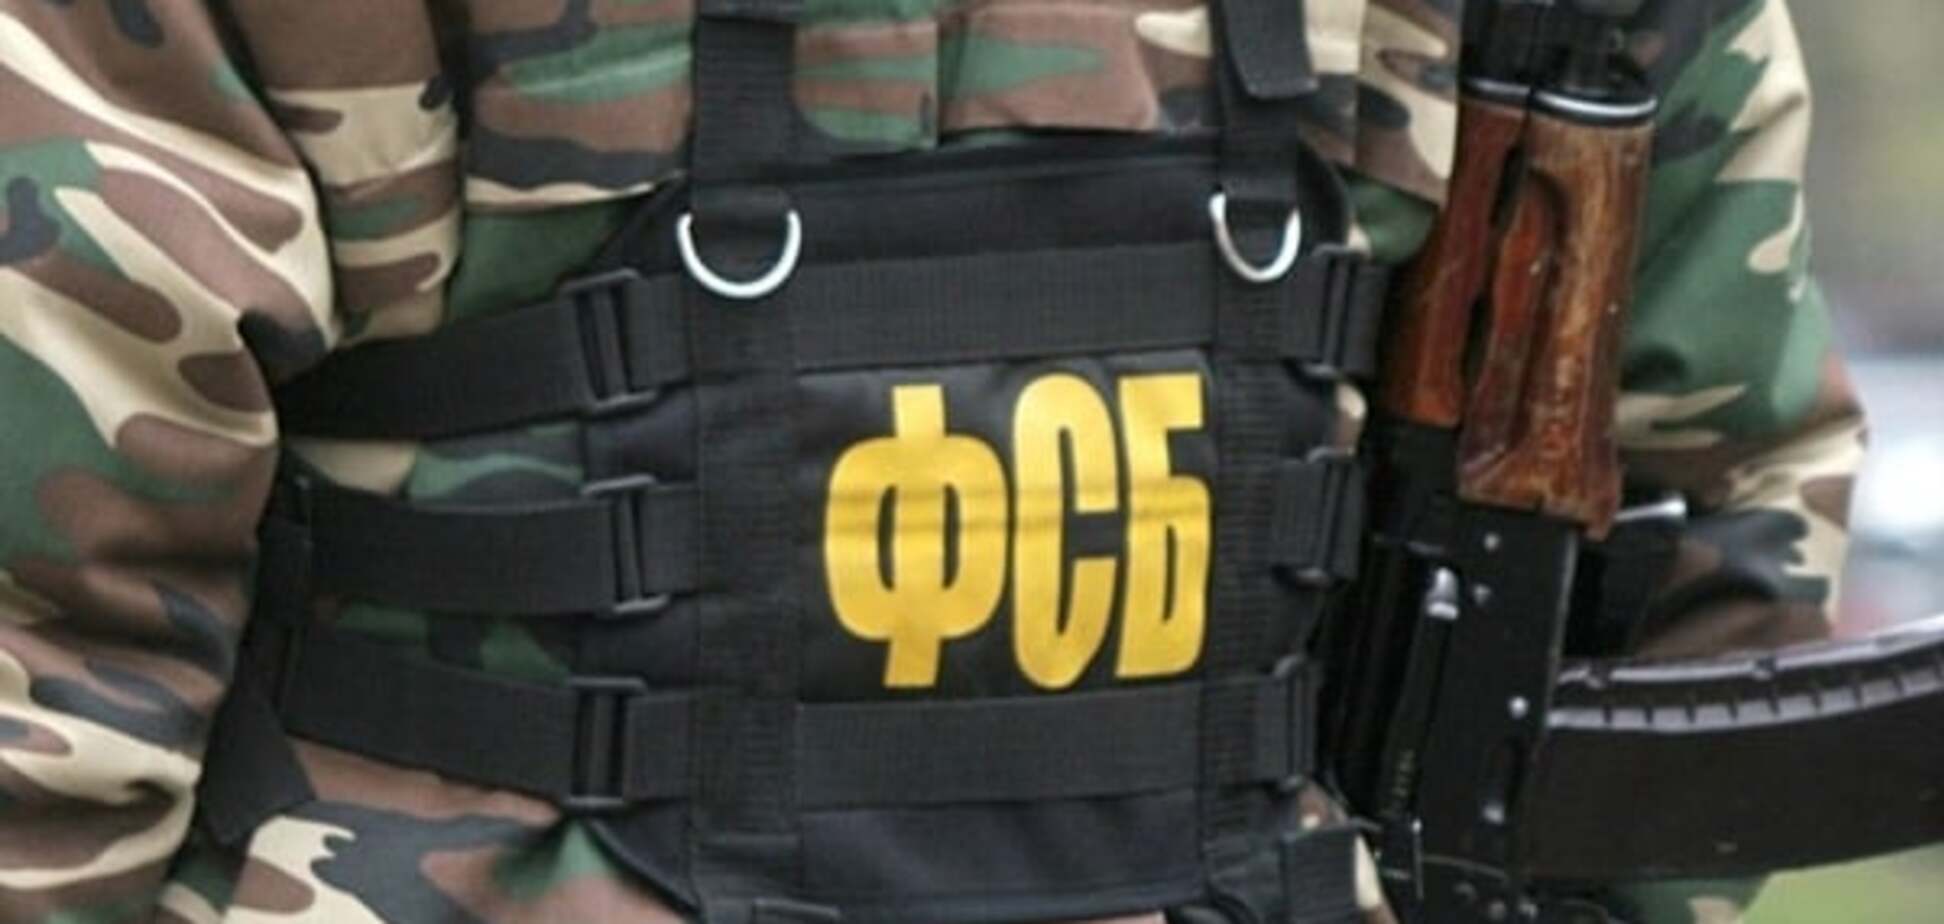 Офицер ФСБ попался на мародерстве в зоне АТО - разведка